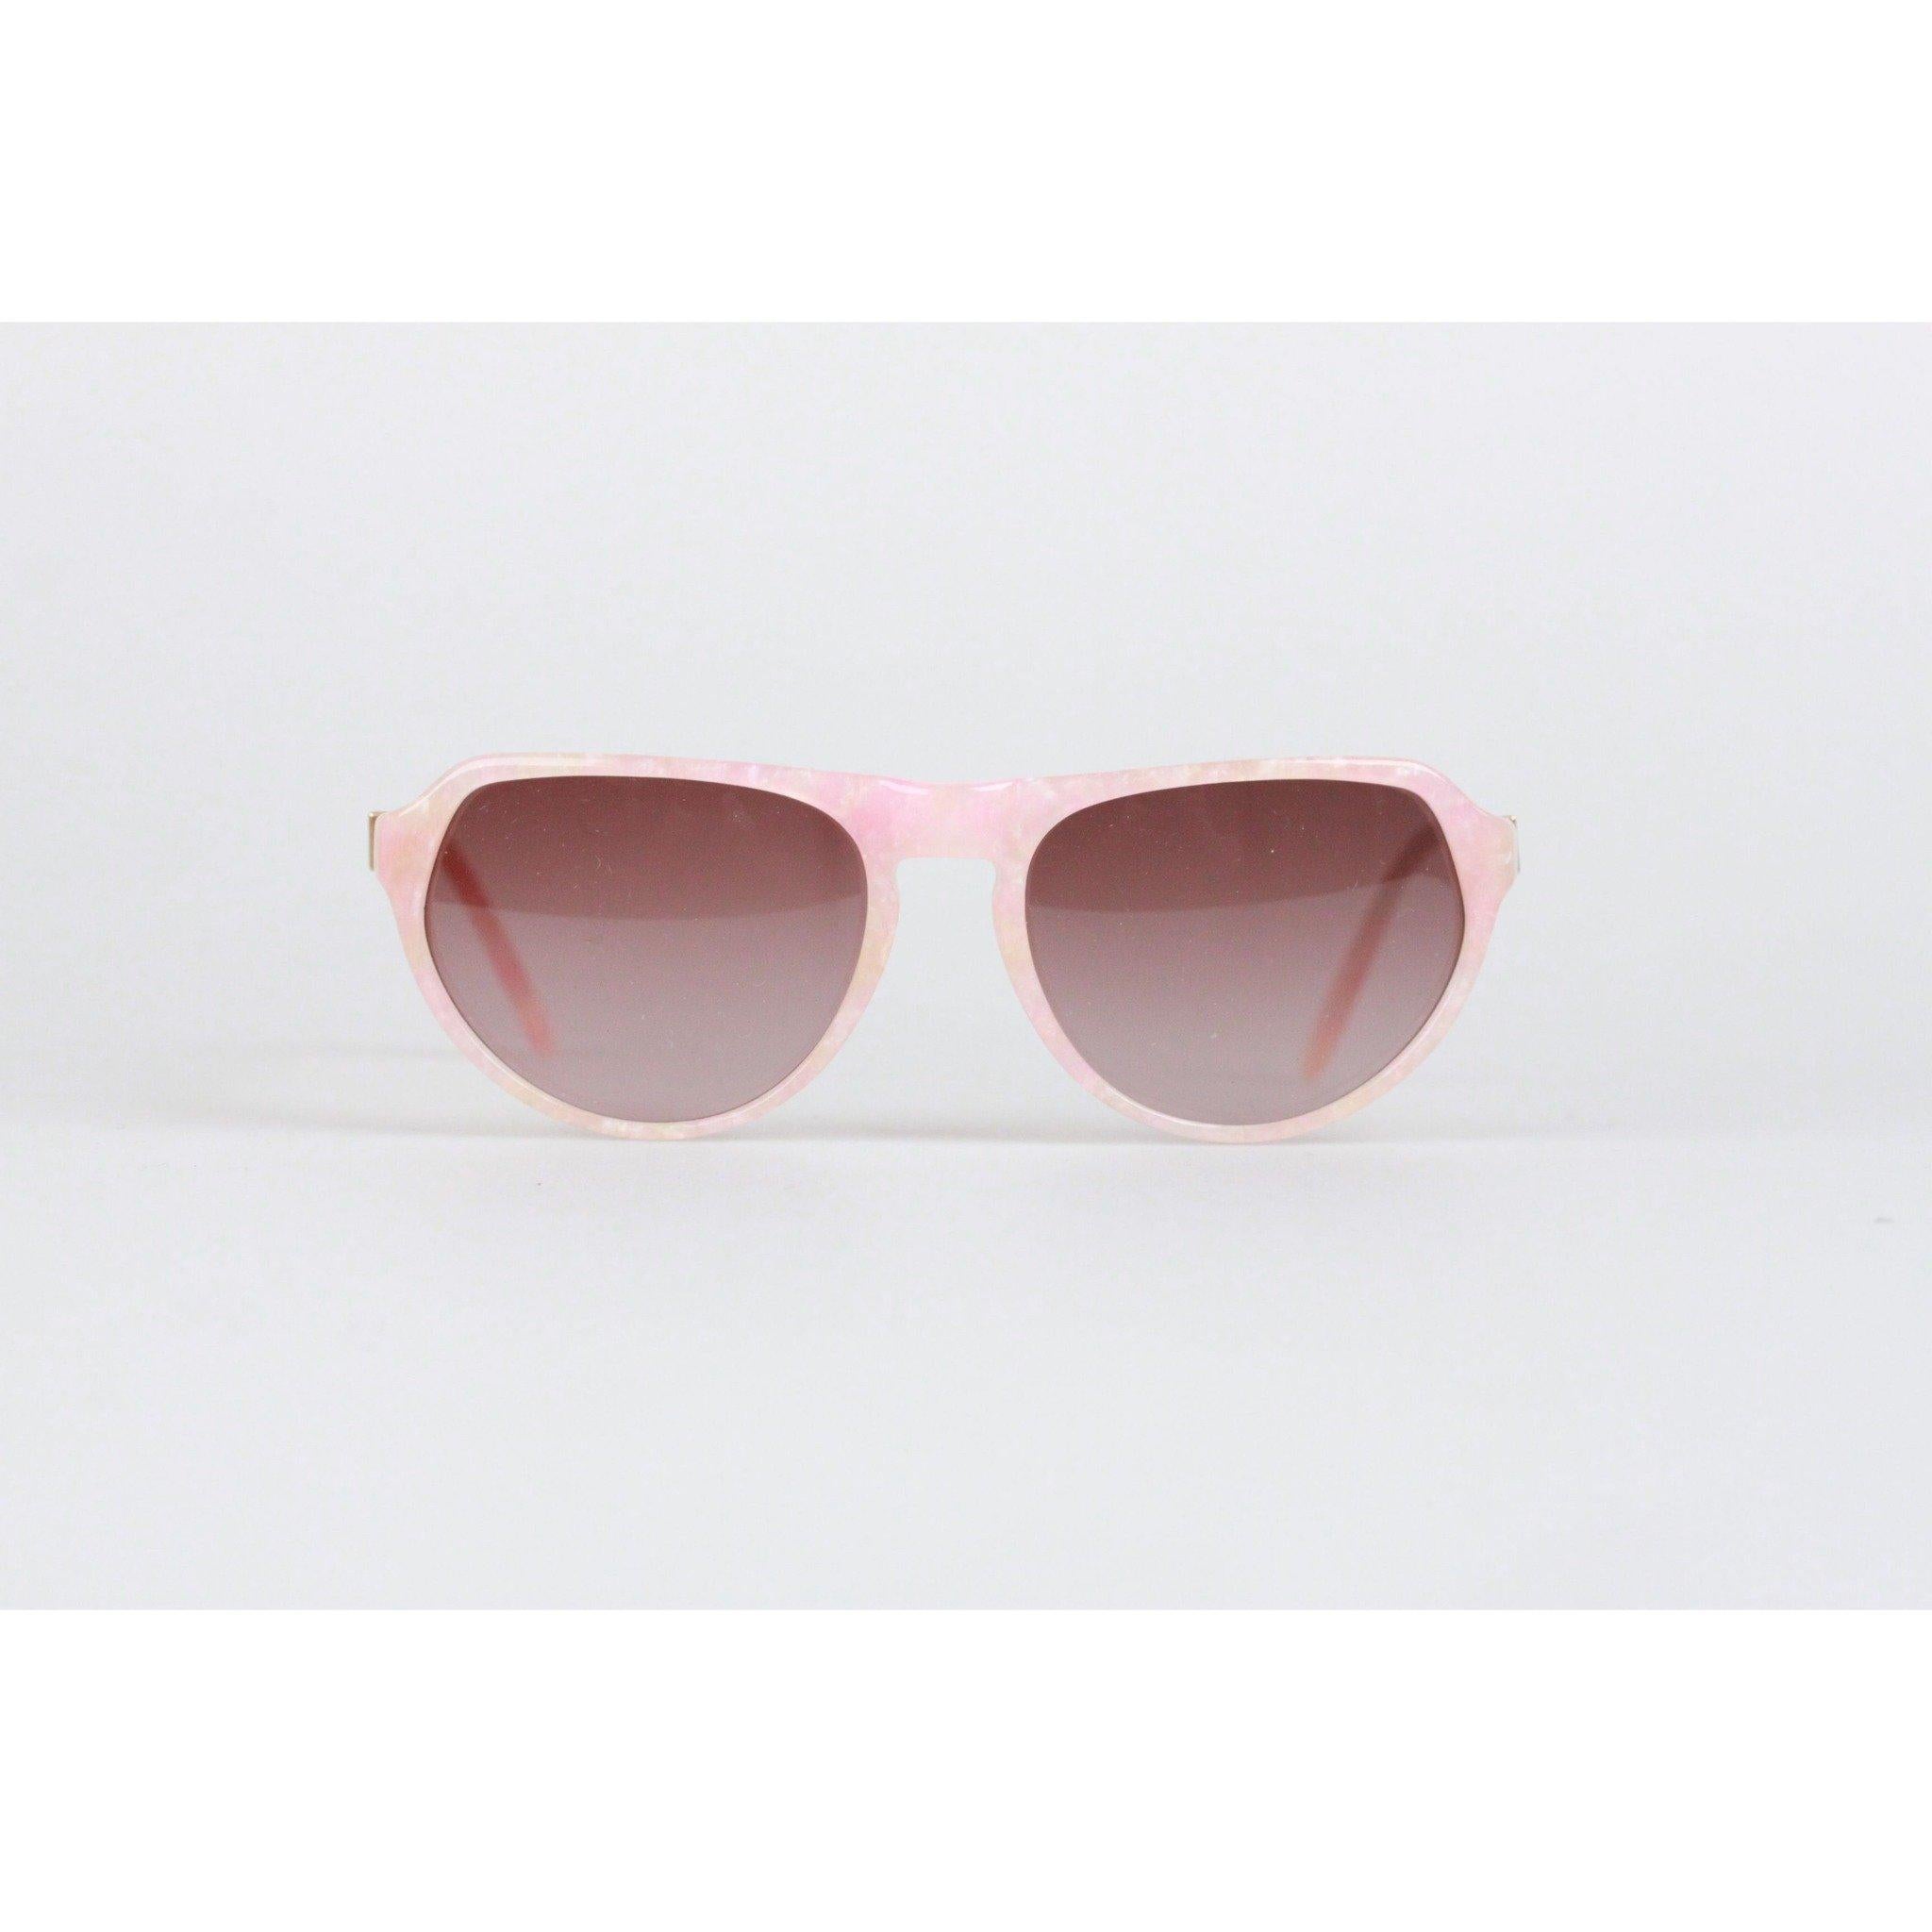 Beige Yves Saint Laurent Yves Saint Laurent Vintage Pink Sunglasses Mod. Priam 54mm